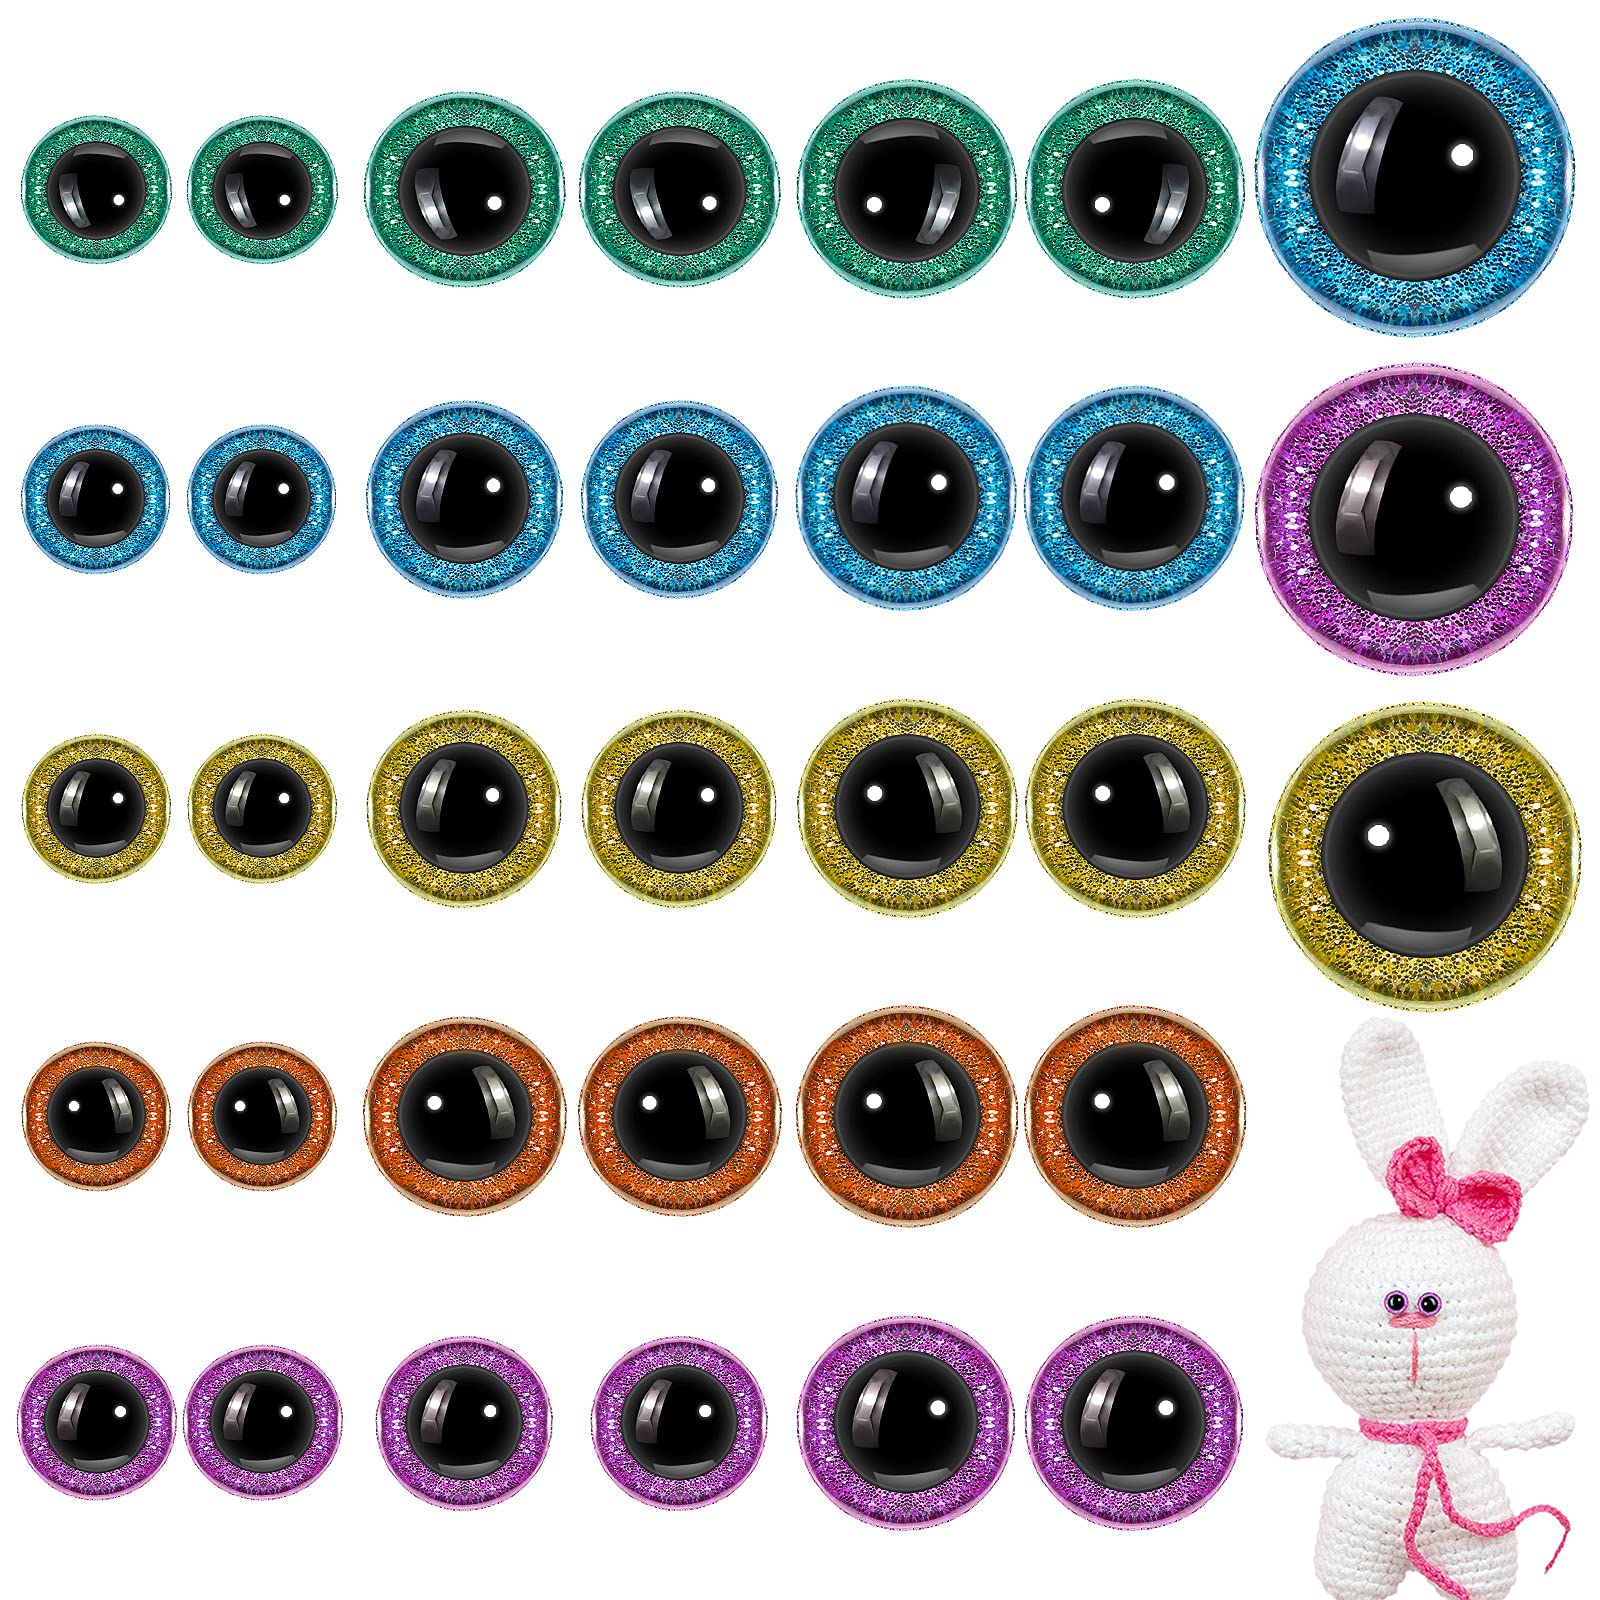 Kawaii Safety Eyes, Circular, Plastic Safety Eyes Craft Eyes With